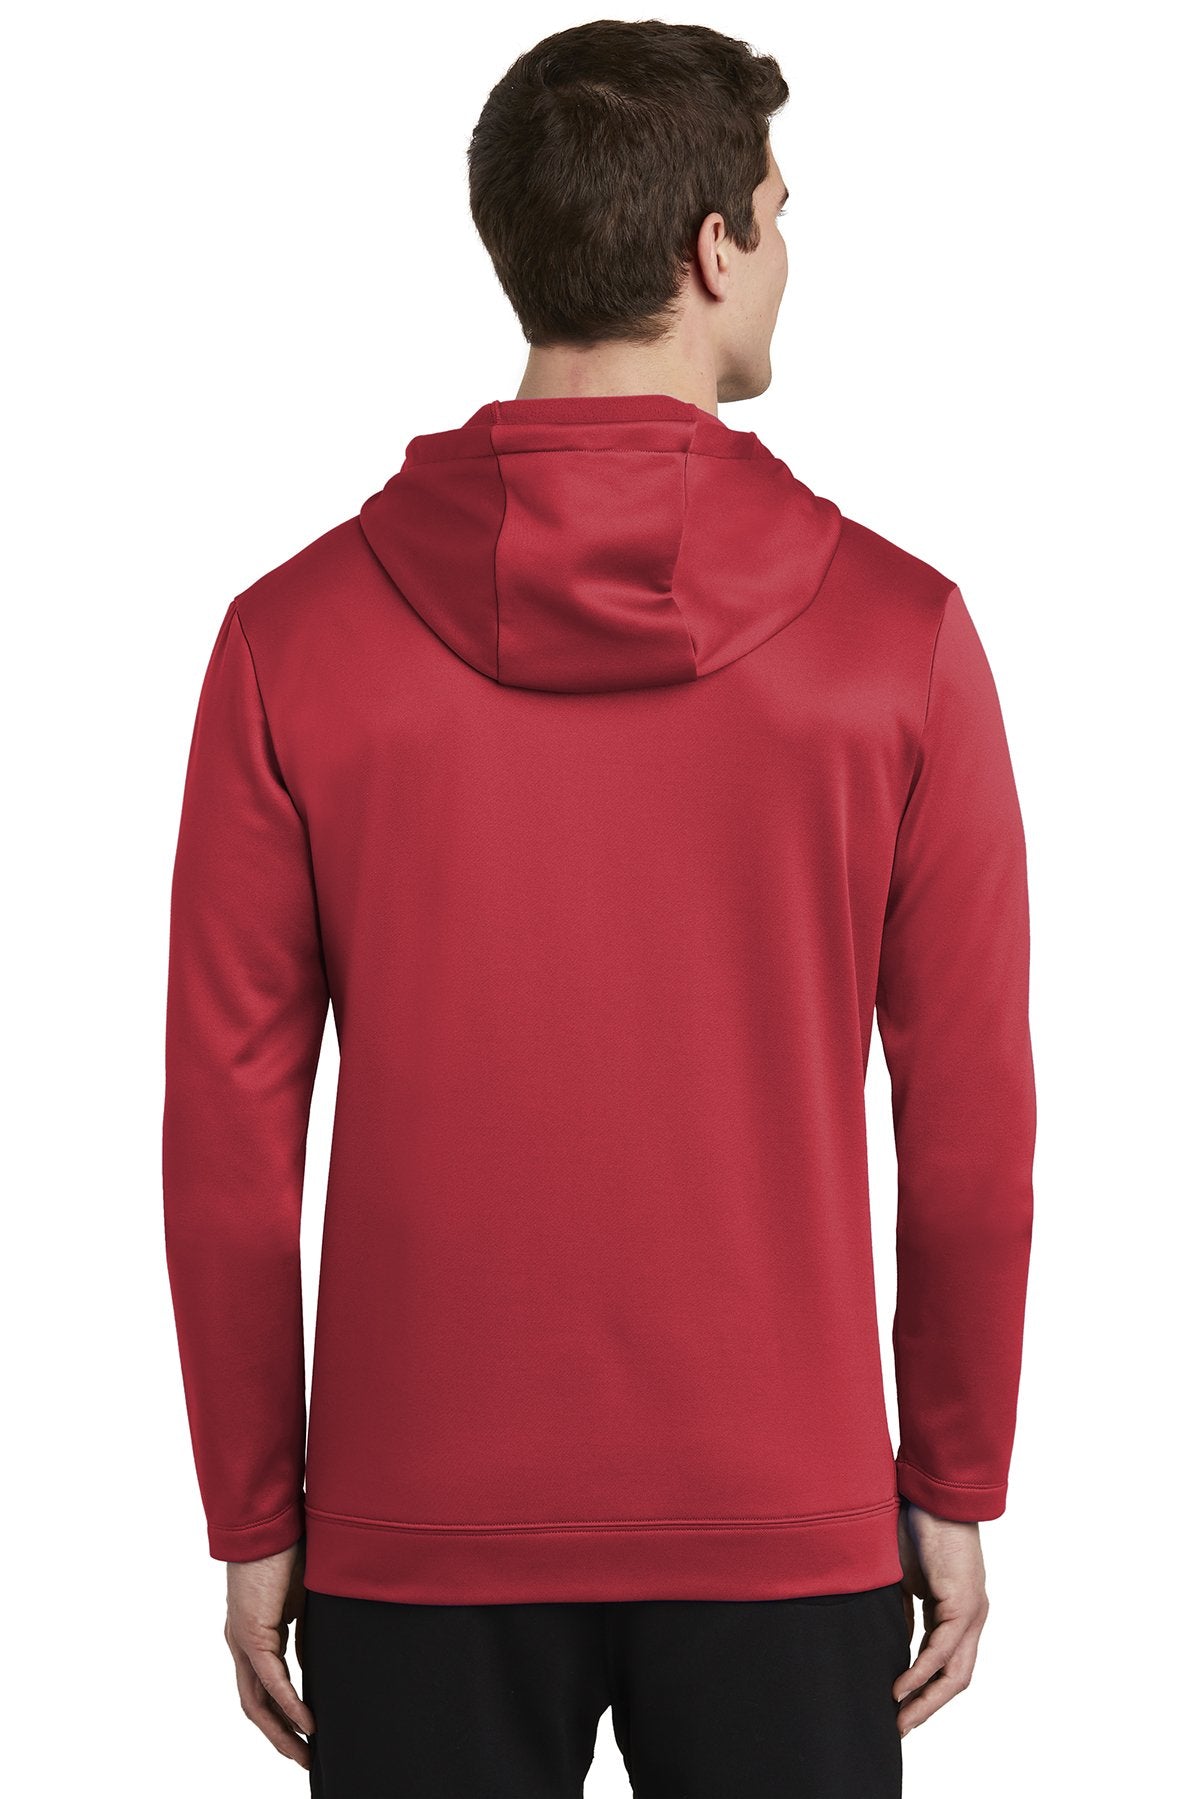 Nike ThermaFIT Customized Zip Hoodies, Gym Red